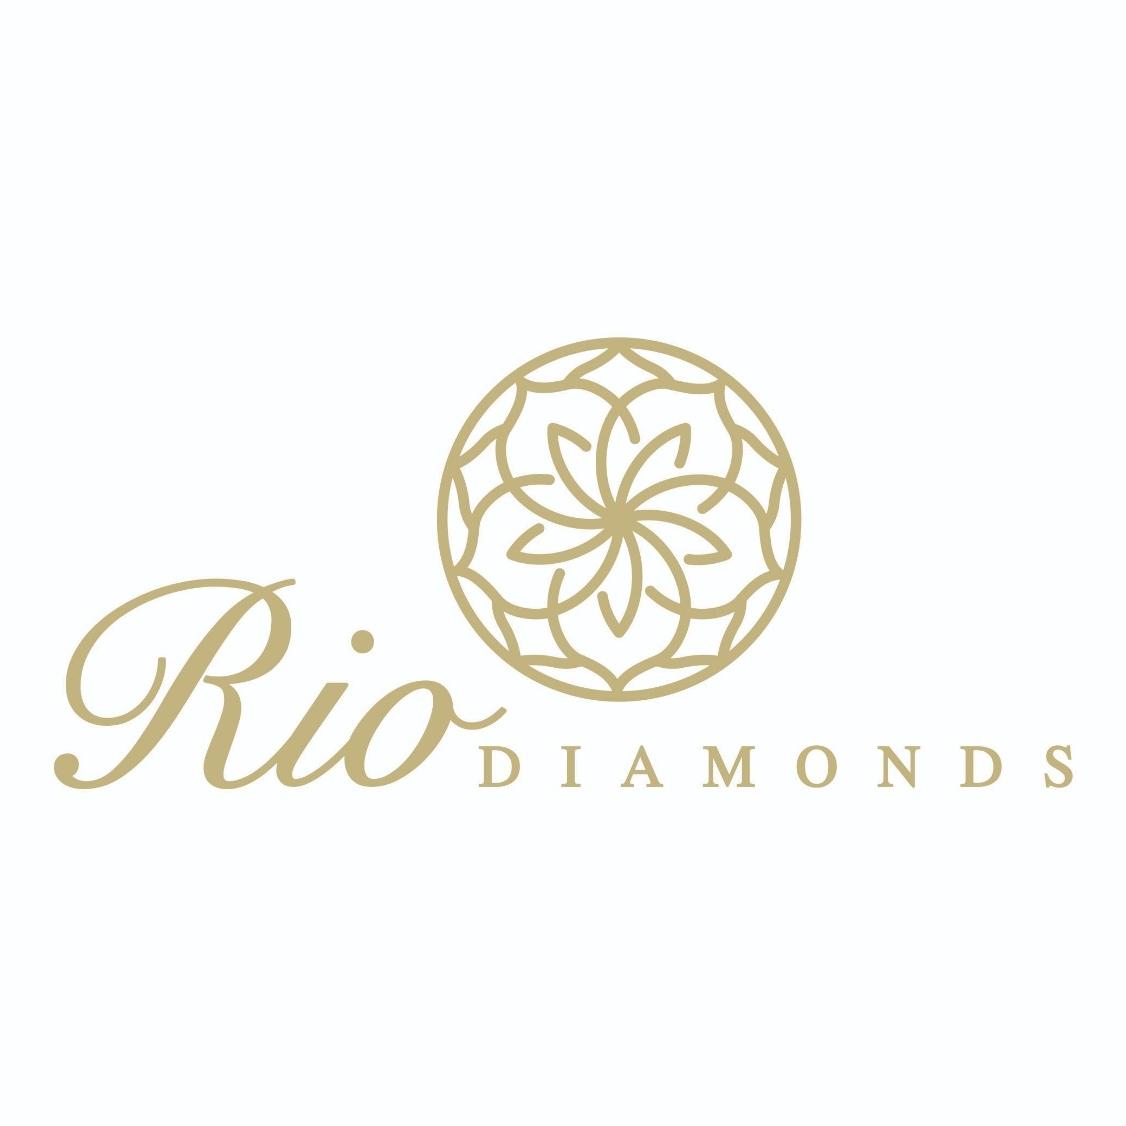 Rio Diamonds's images